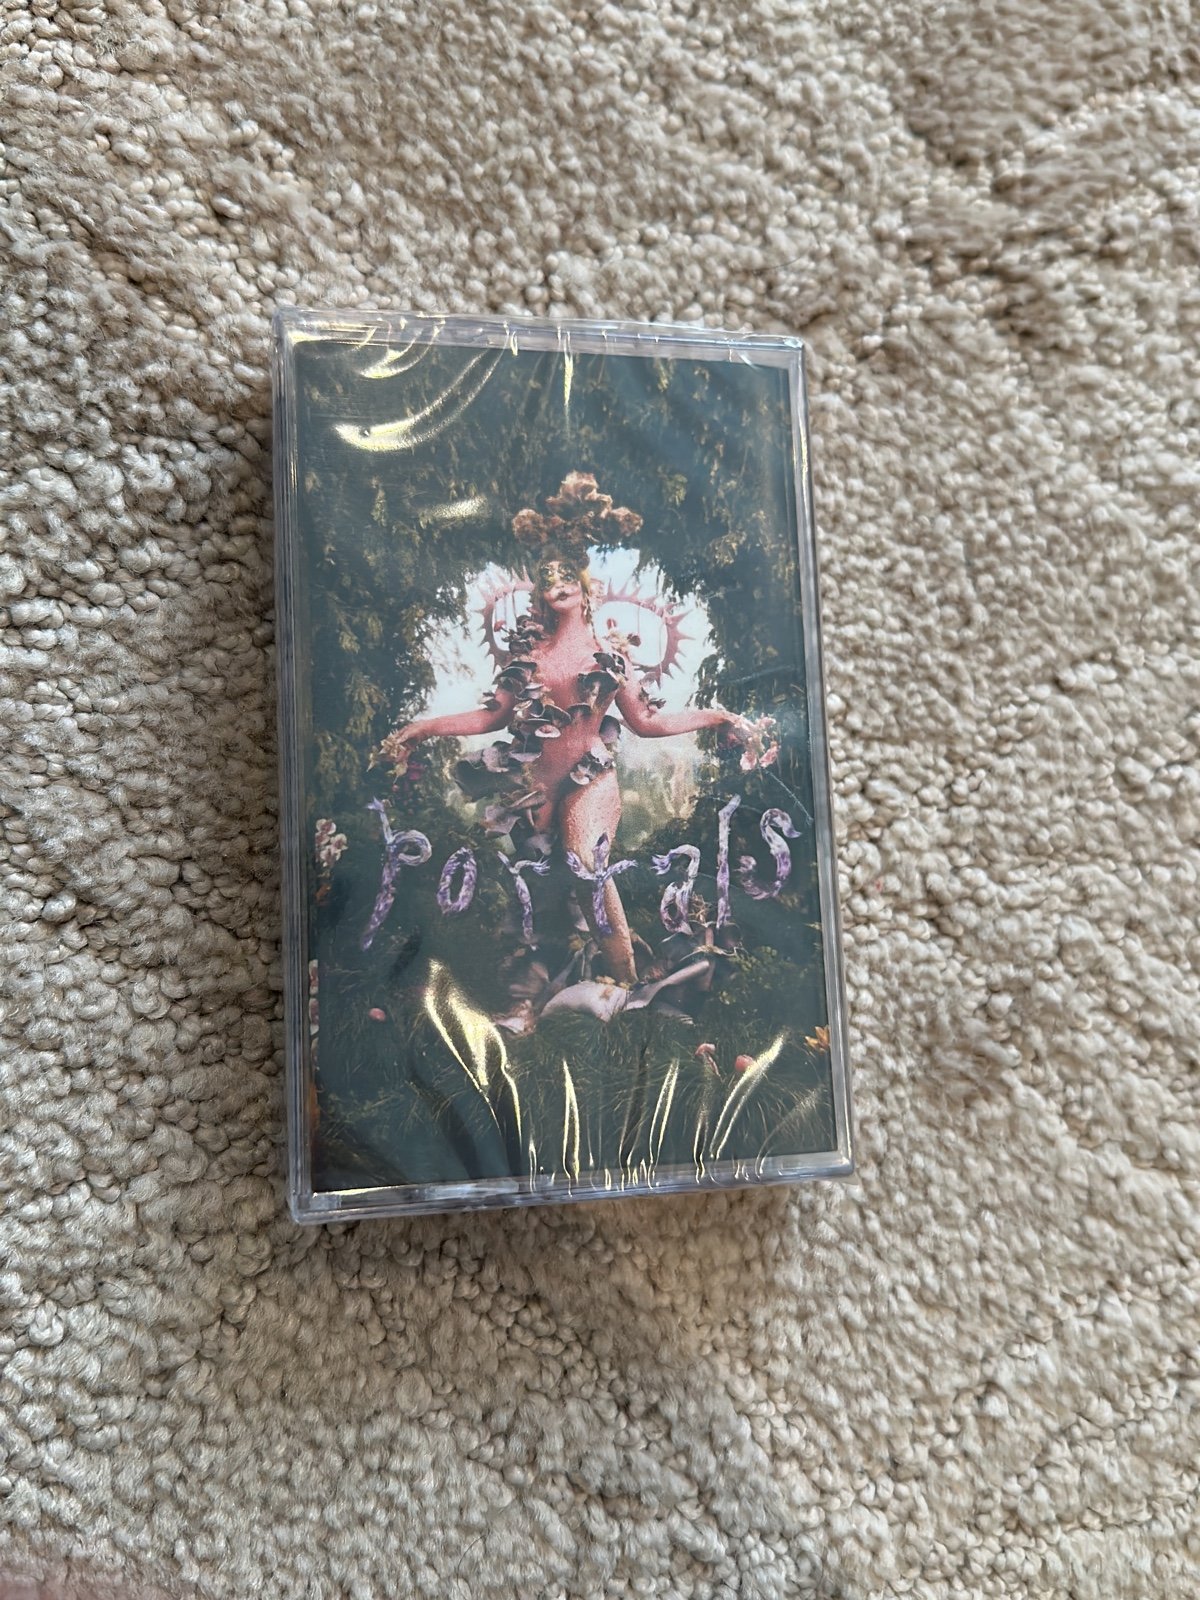 melanie martinez portals cassette coral pink swirl /3000 spotify exclusive AqW7R25P5